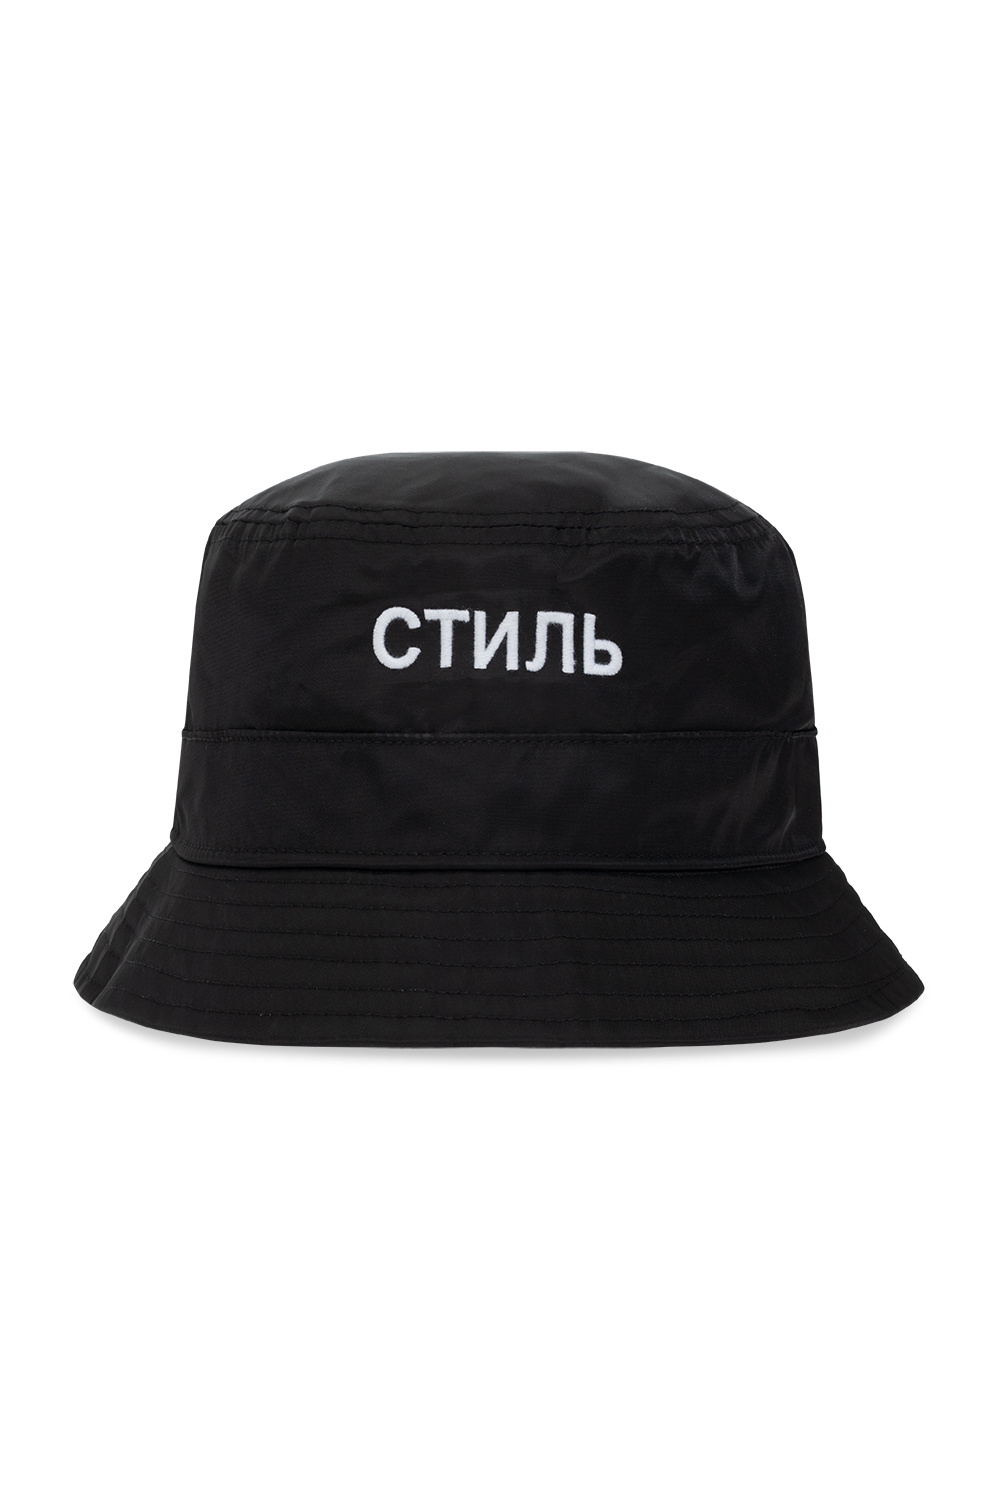 with Cap hat | Men\'s Wigston Bucket Heron Preston logo Lonsdale | Biname-fmedShops | Accessories